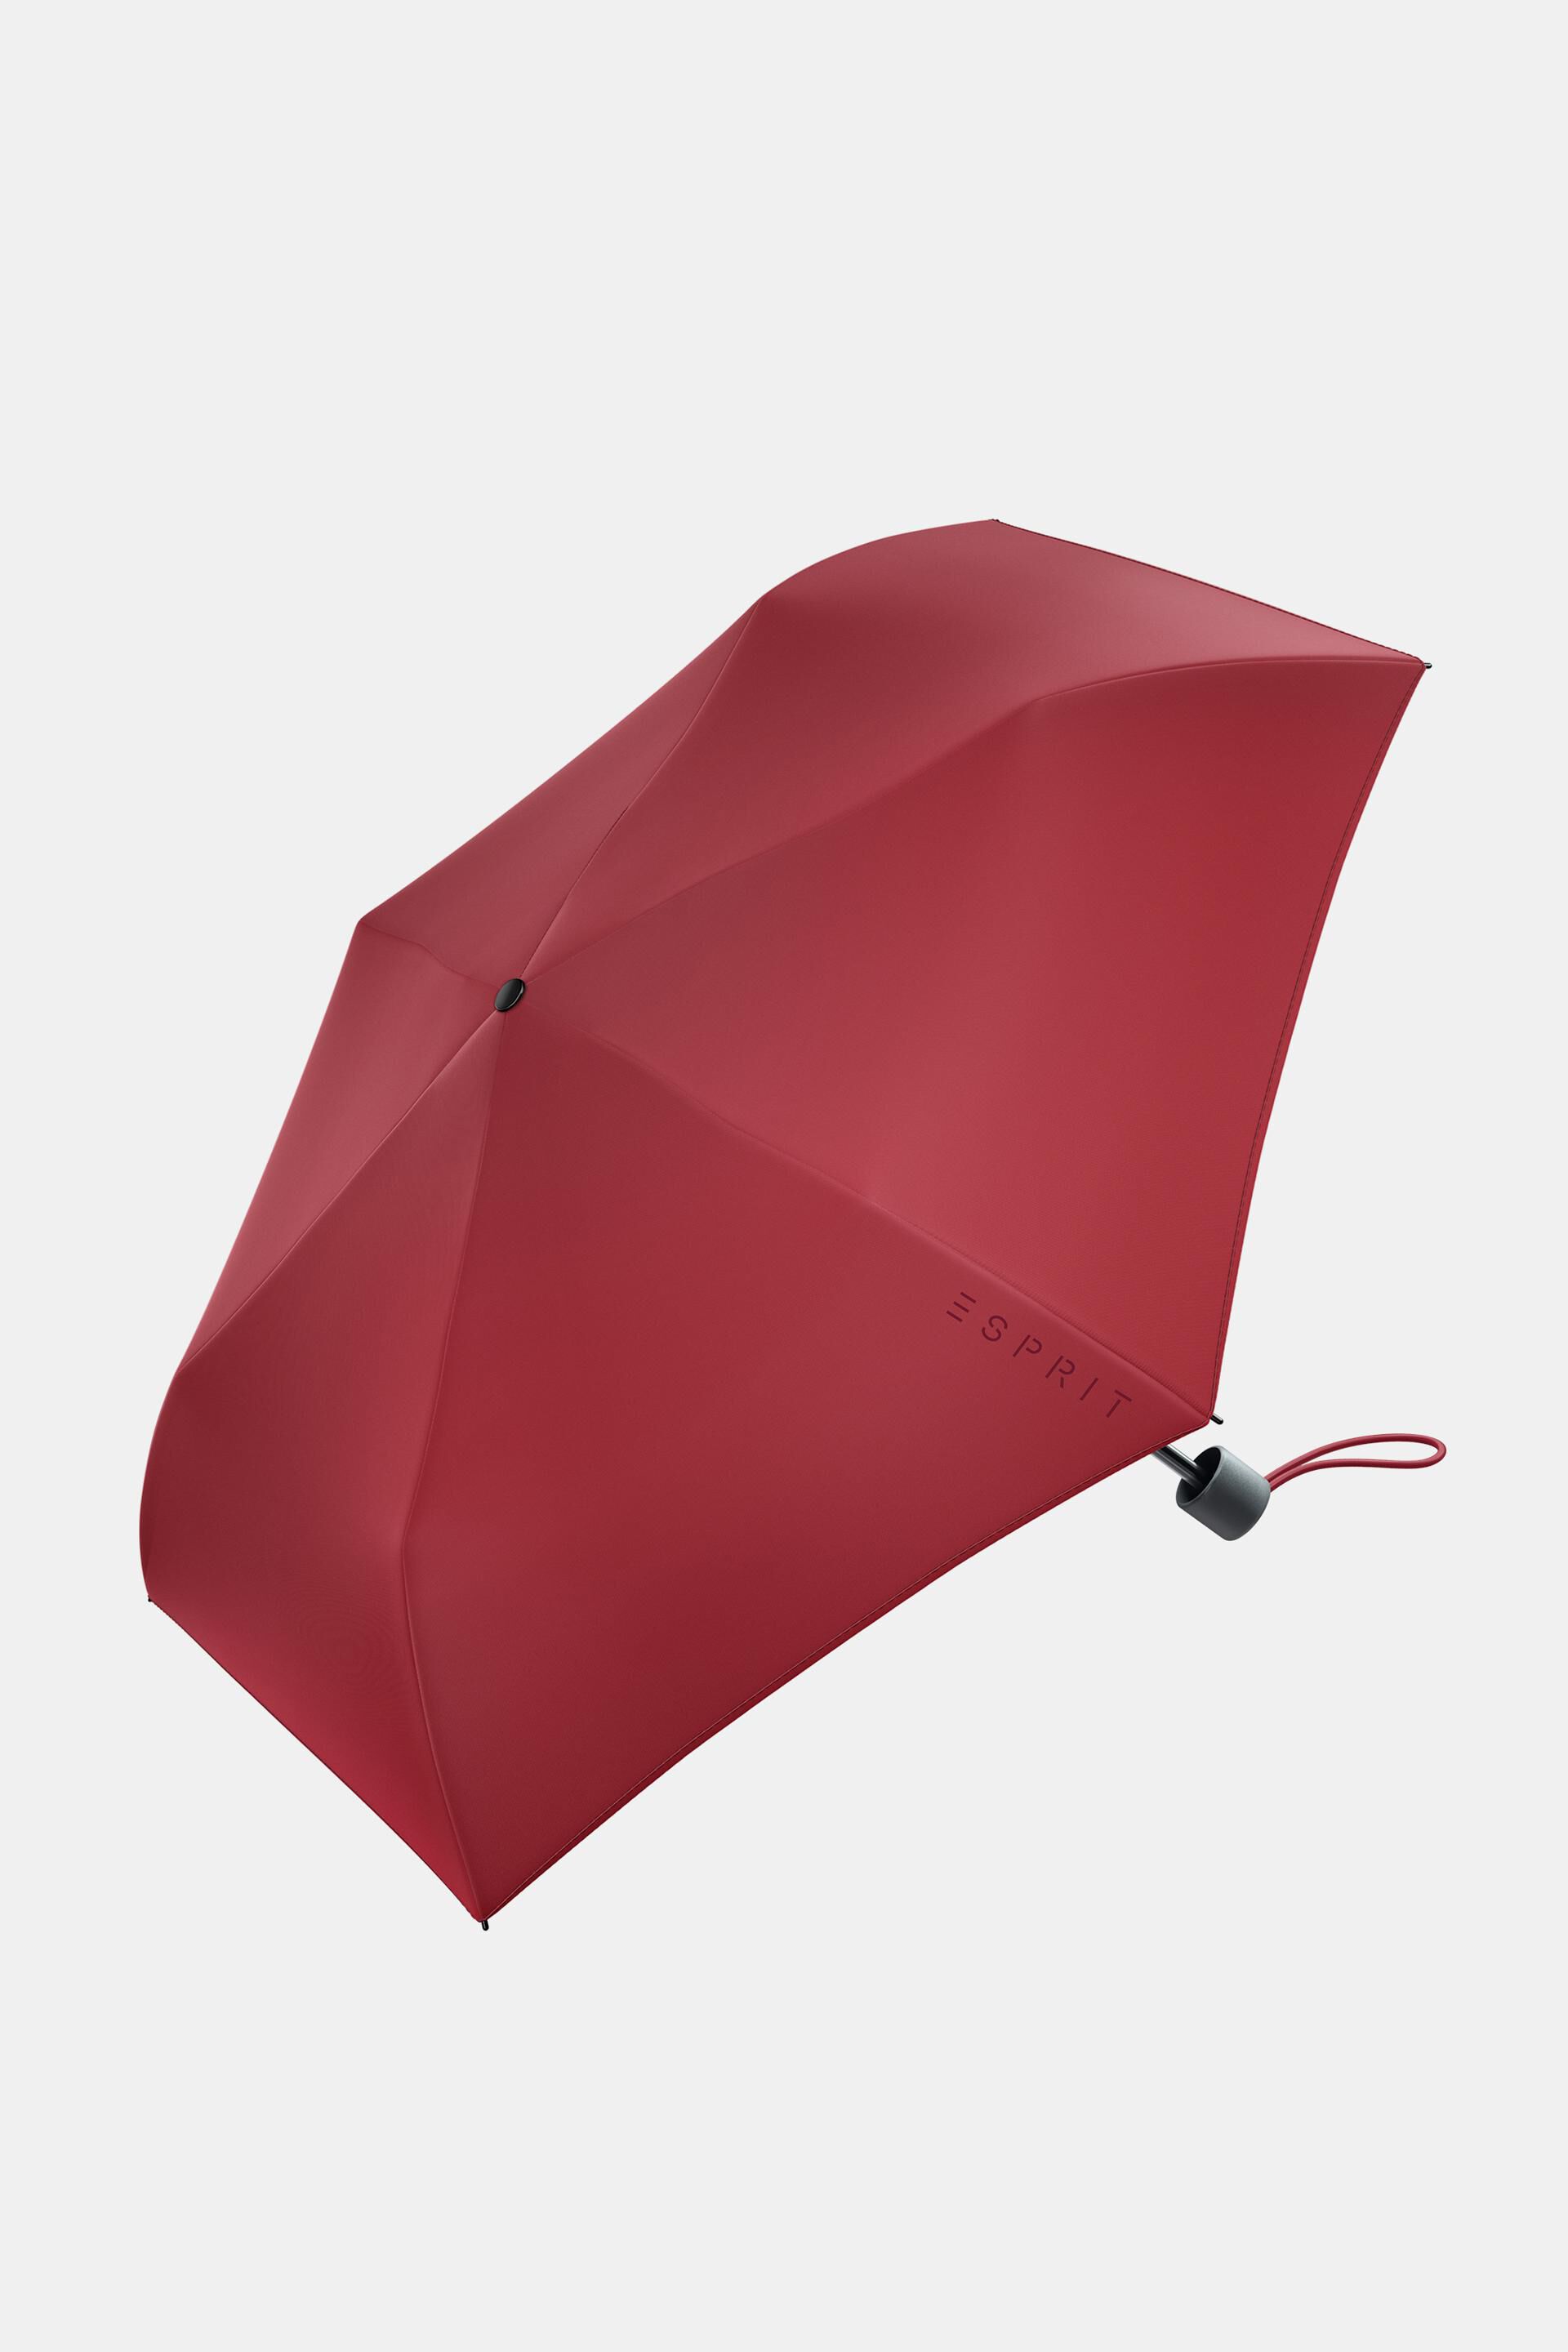 Esprit with umbrella logo Pocket red print in